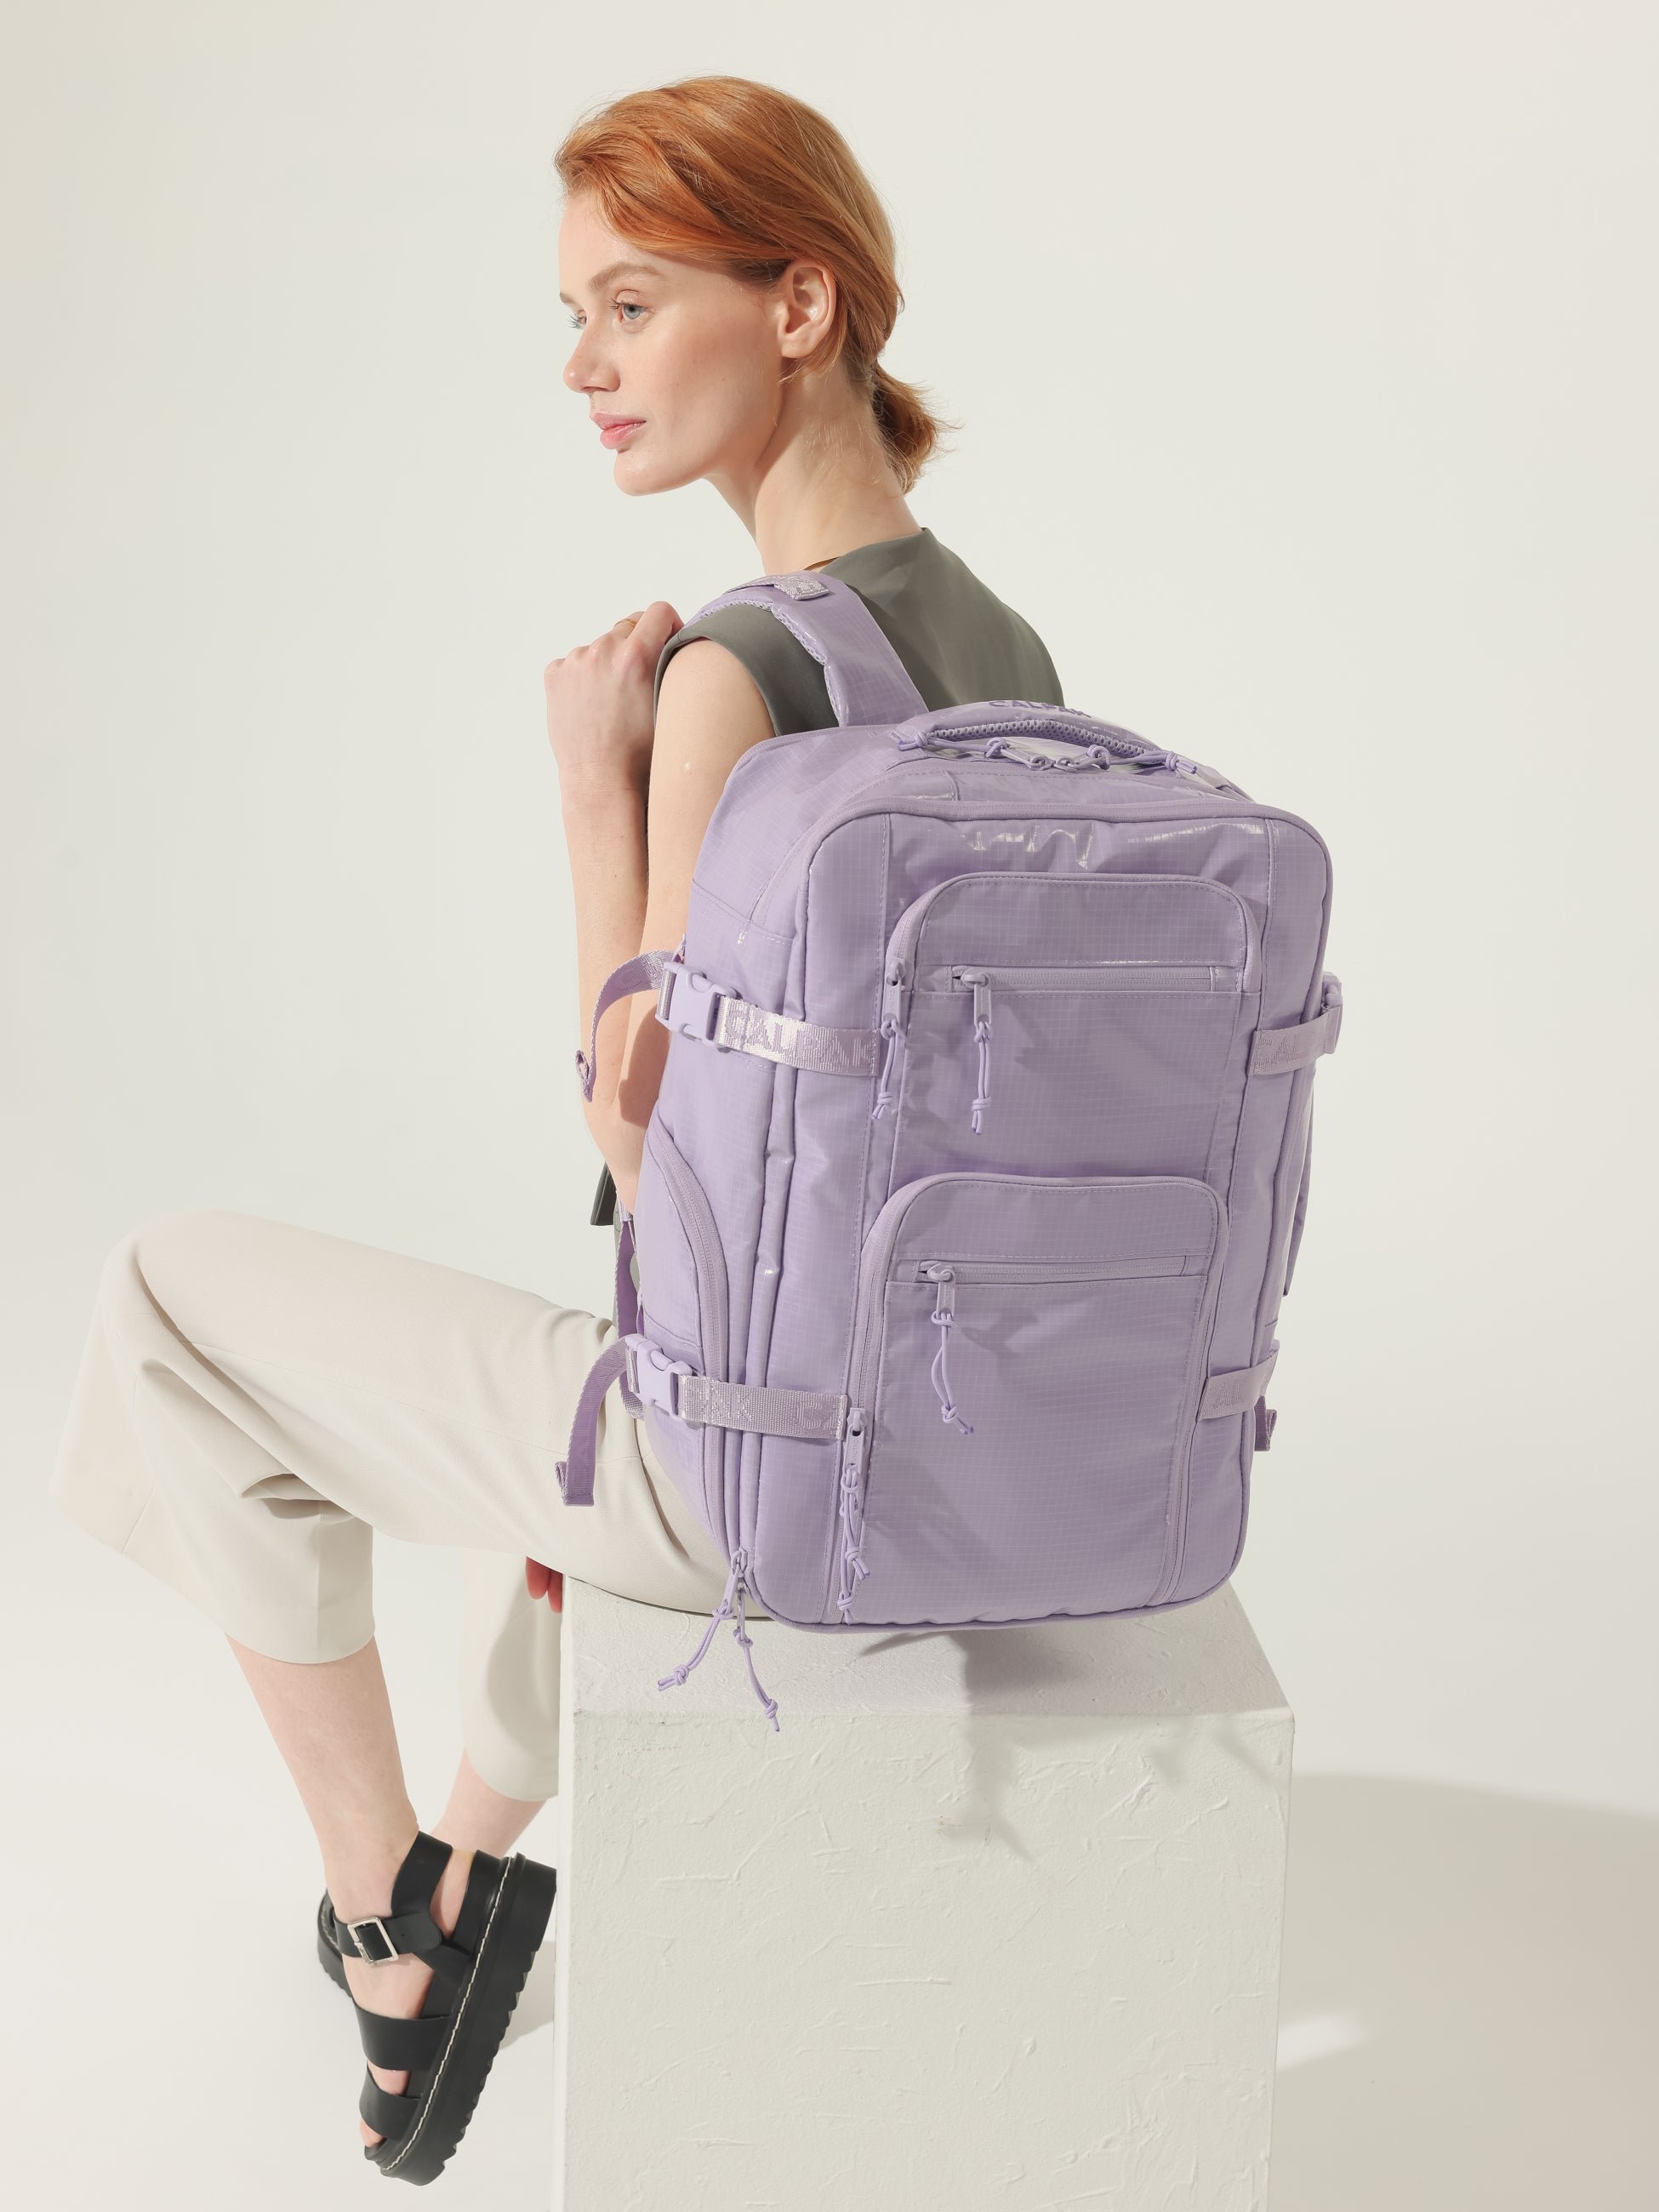 Model wearing CALPAK Terra 26L Laptop Backpack Duffel with adjustable padded shoulder straps in amethyst